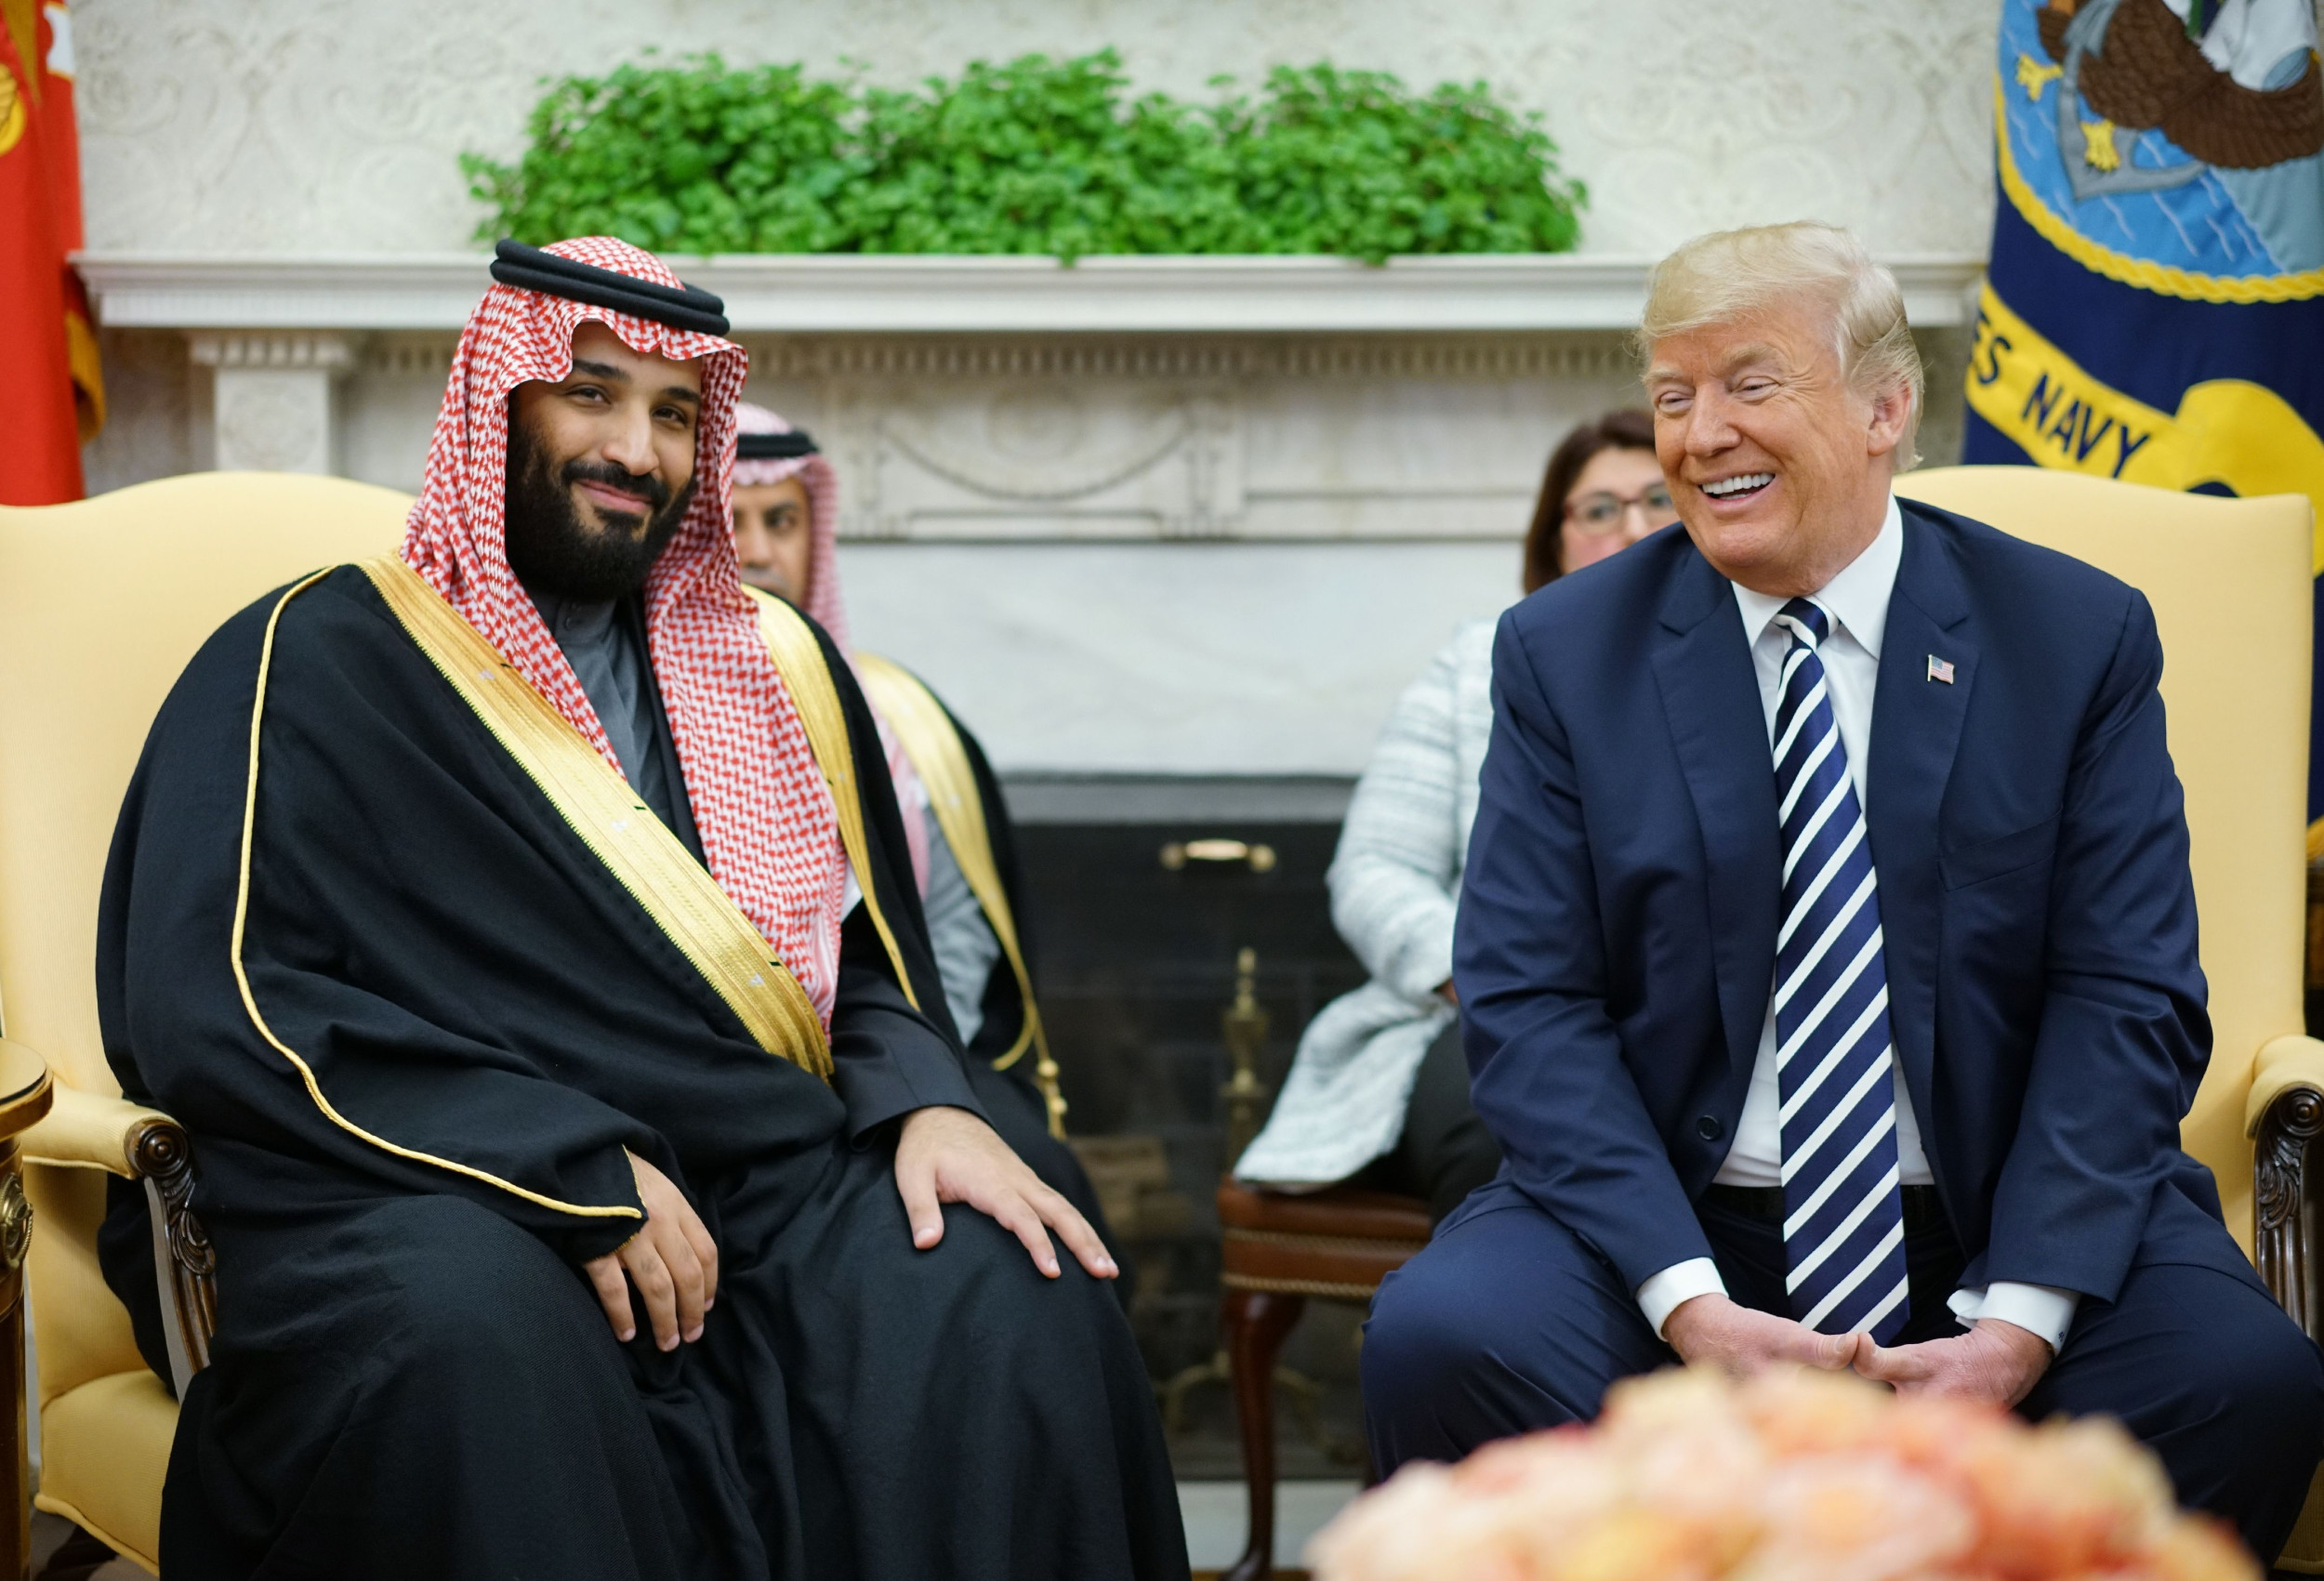 Trump and Kushner Slammed for Benefitting From Saudi Funds